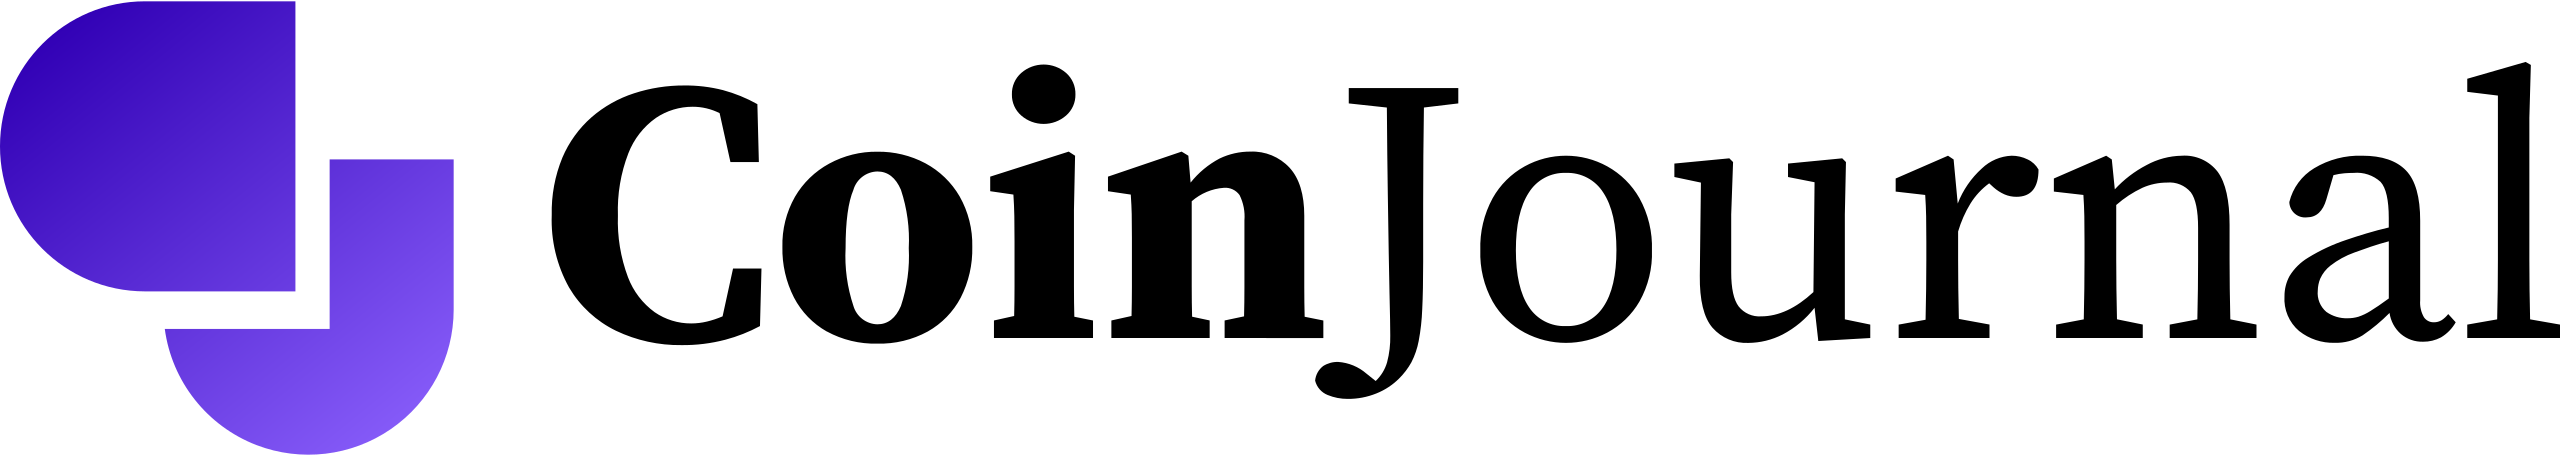 CoinJournal-logo.svg.png